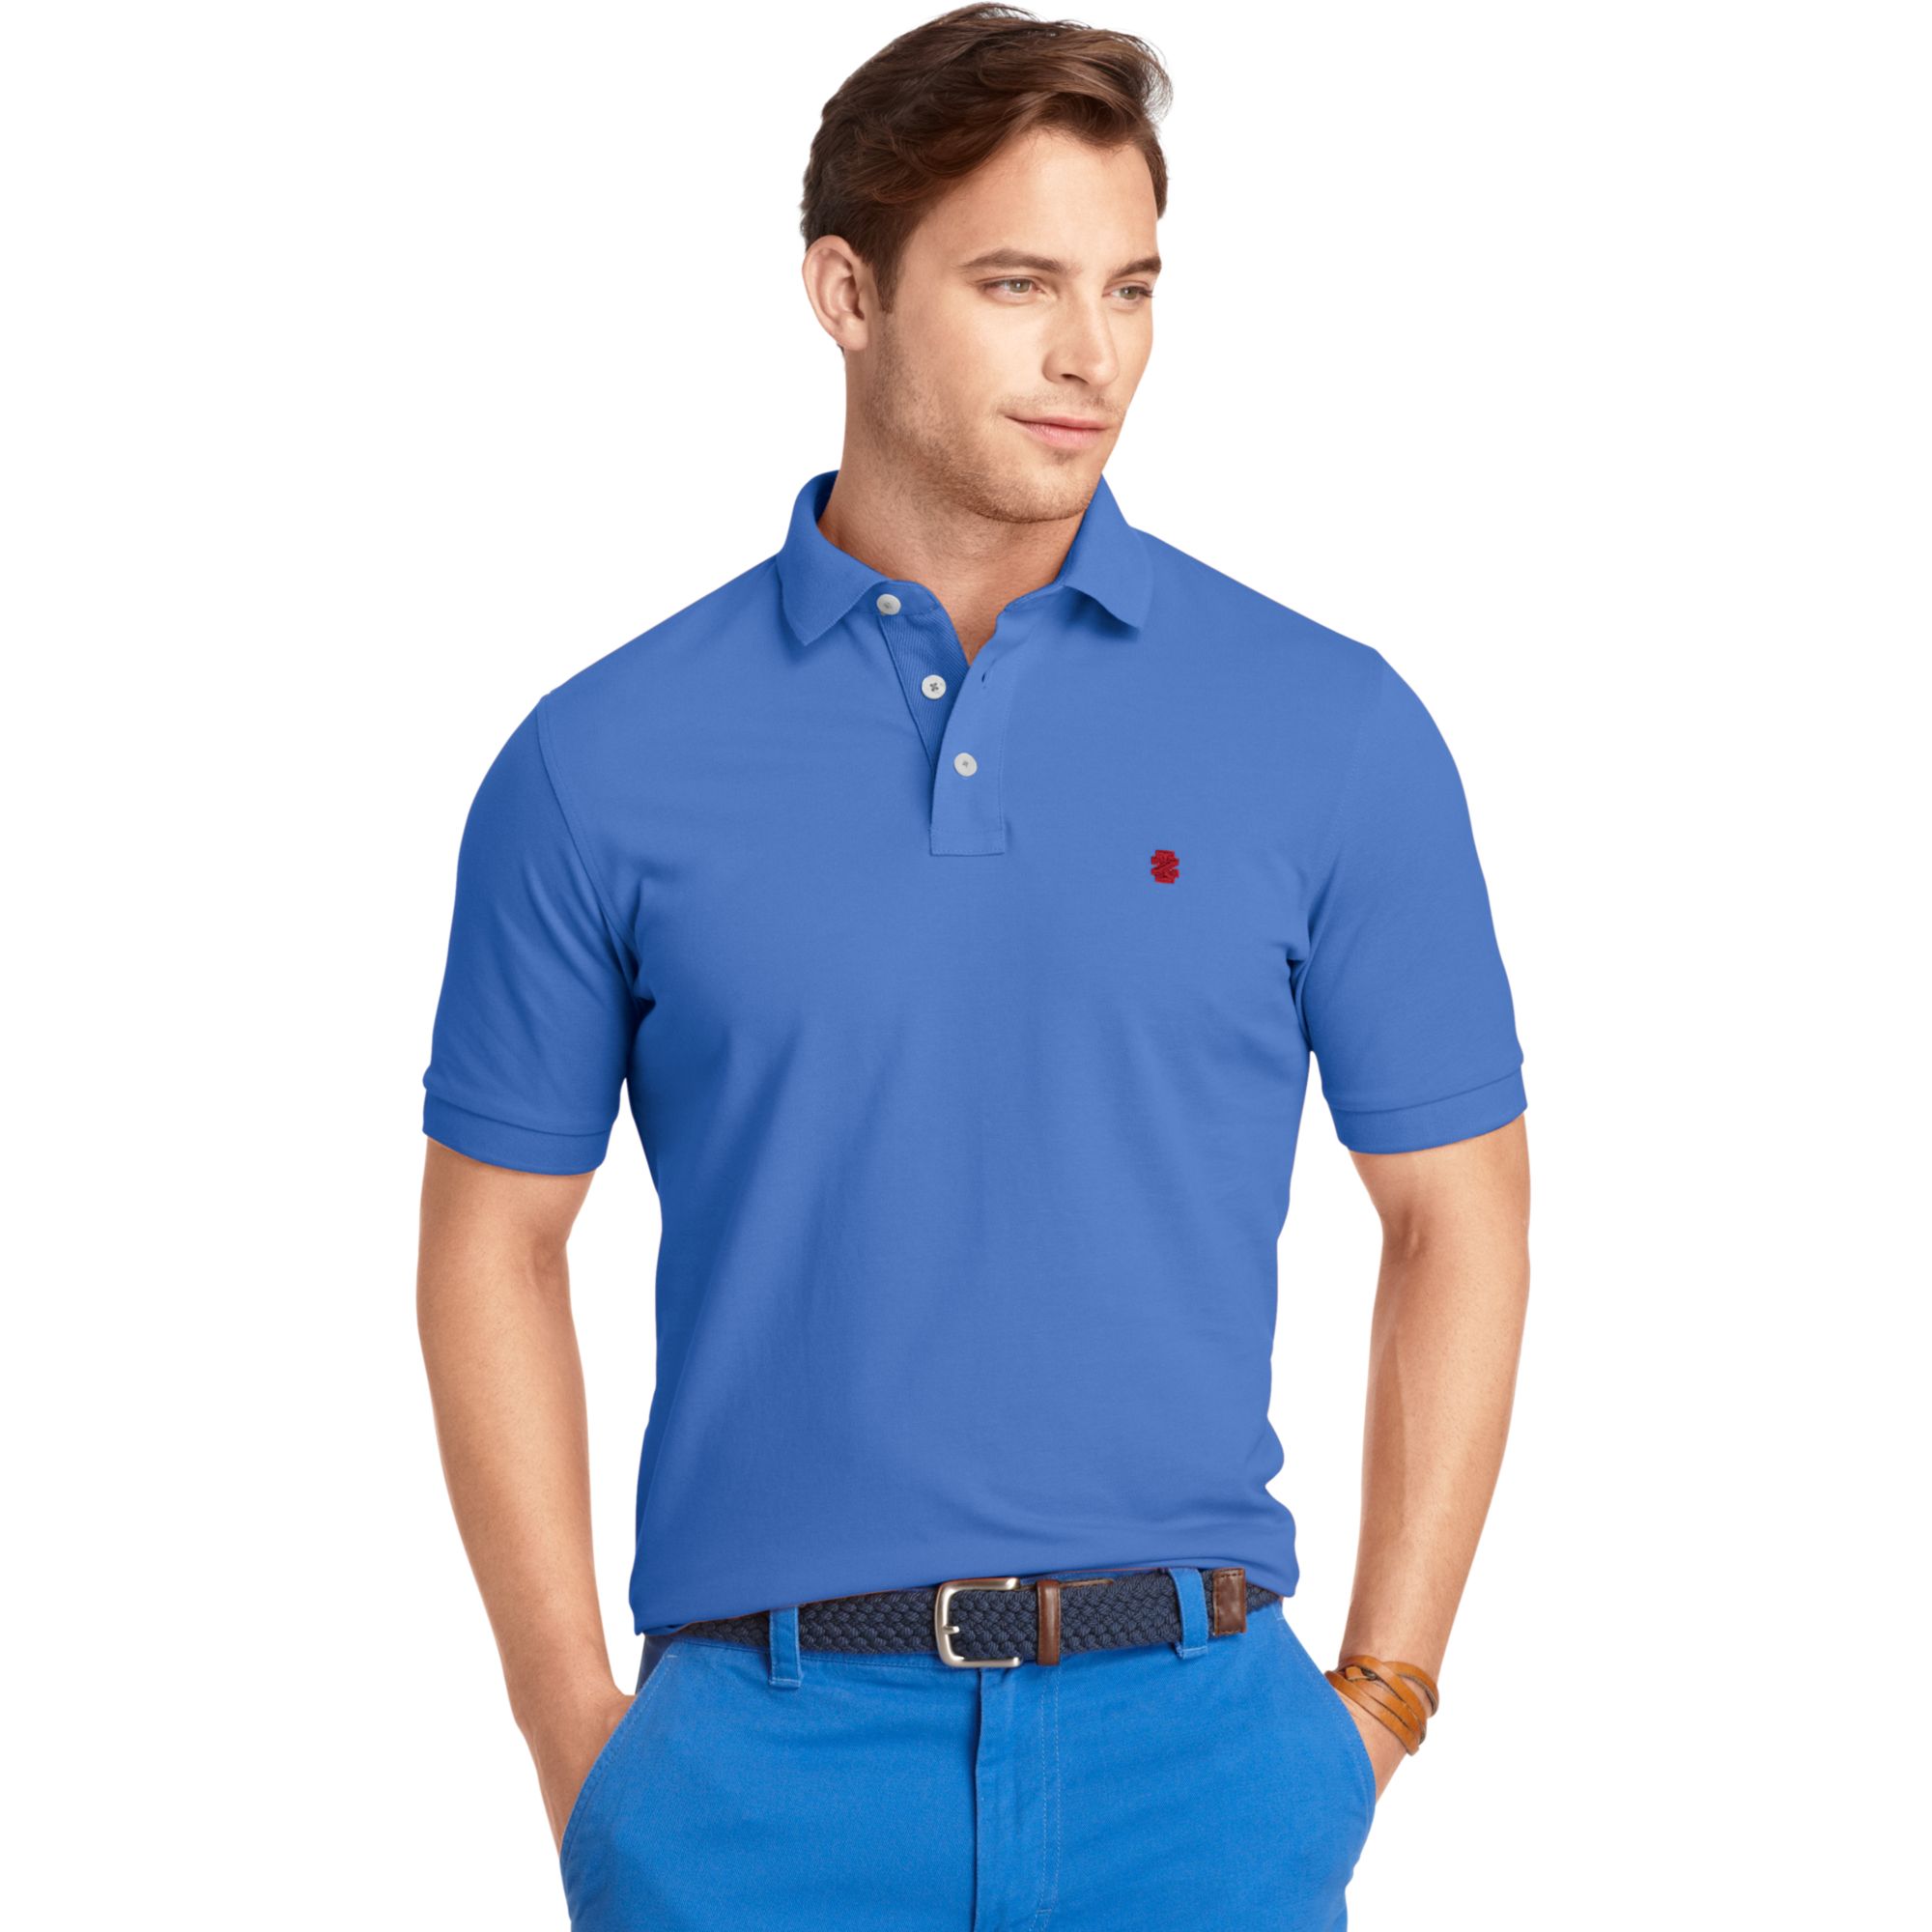 Izod Izod Shirt Montauk Salt Slim Fit Pique Polo in Blue for Men - Lyst